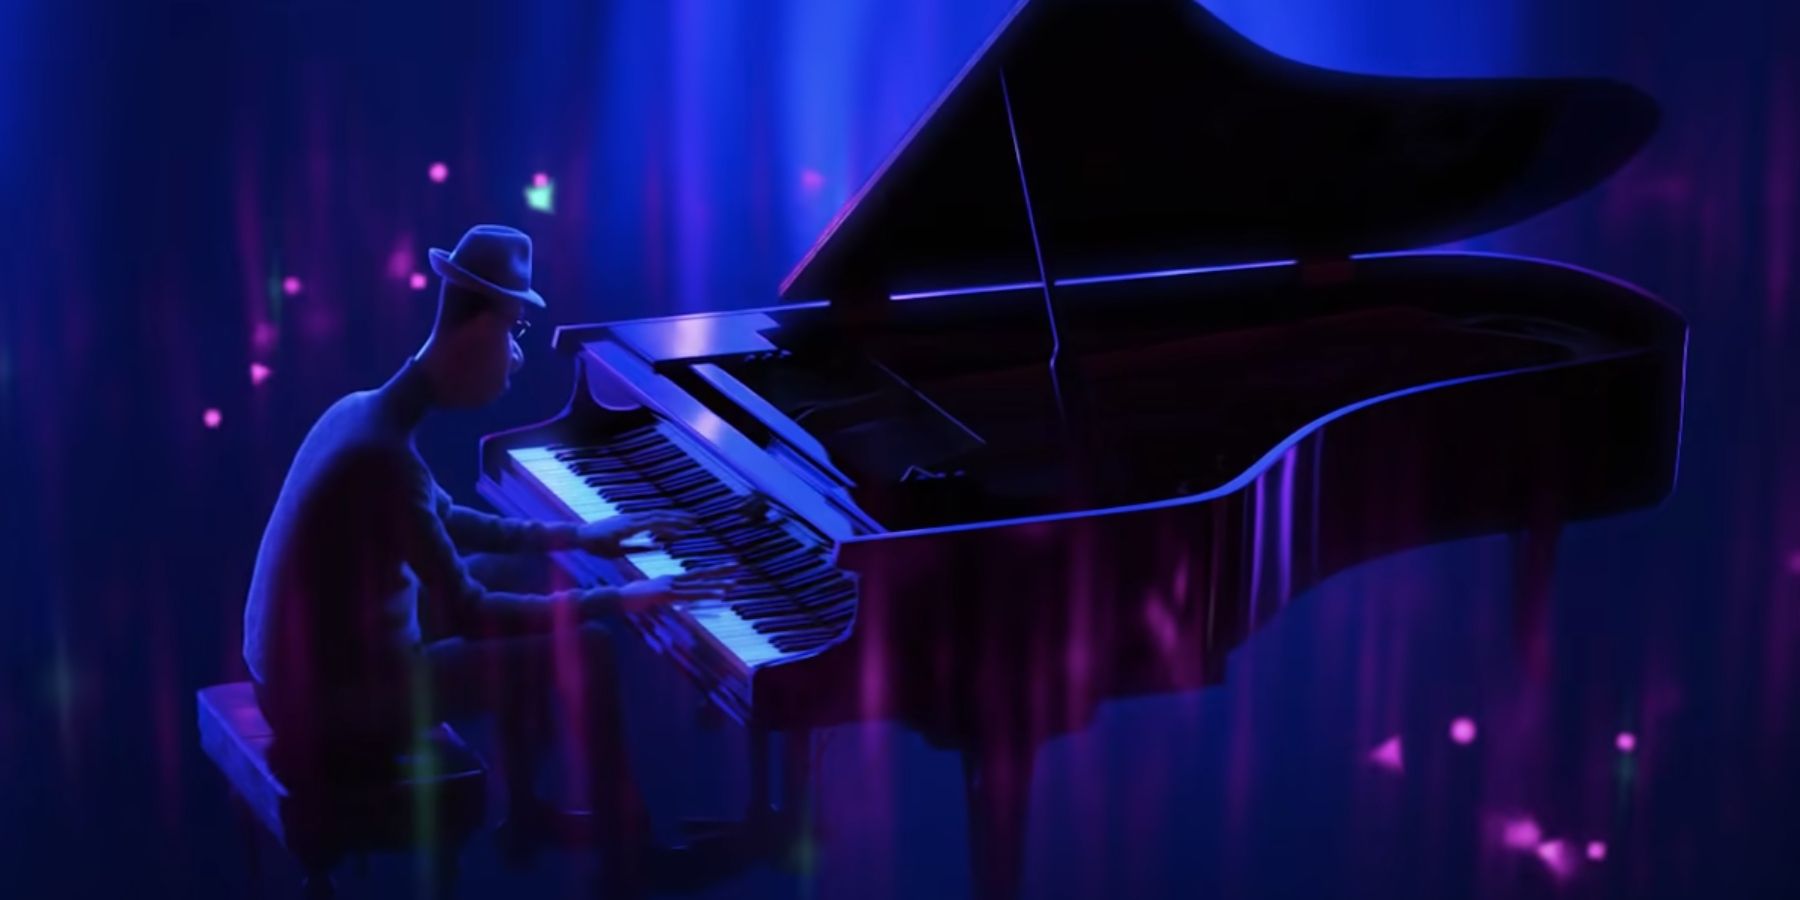 Joe playing the piano in Pixar's Soul.